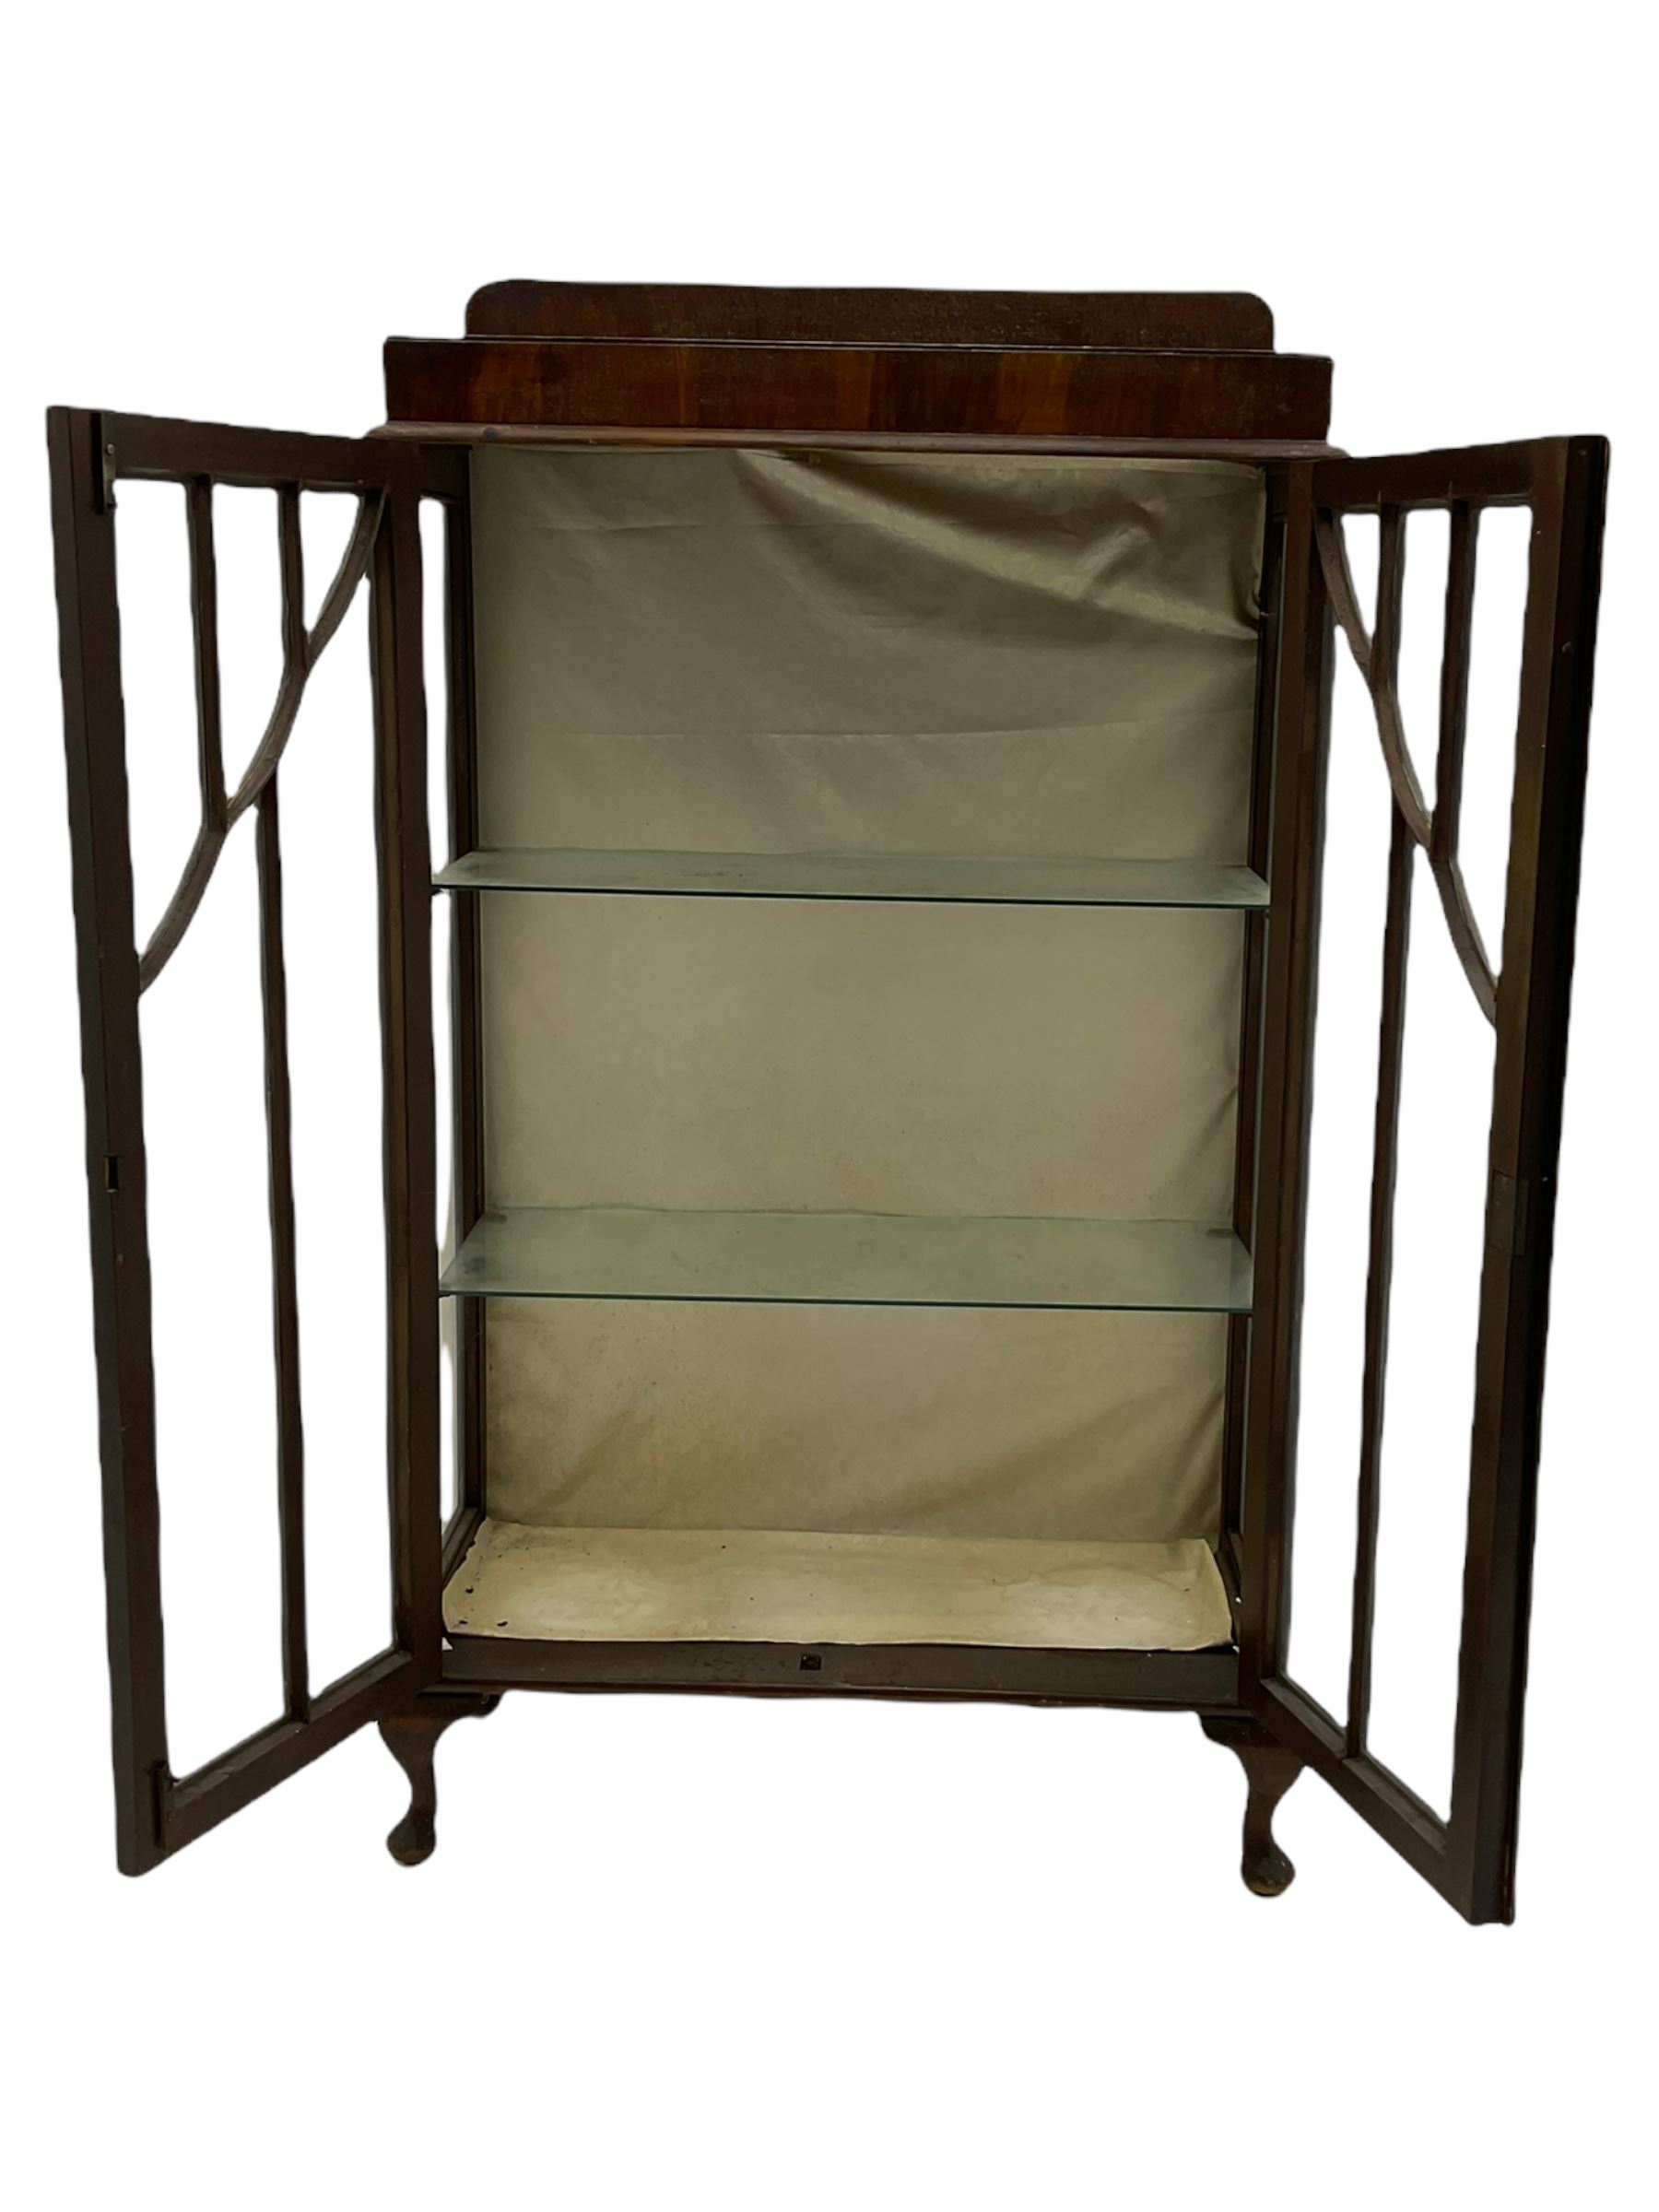 Glazed wooden display cabinet - Image 5 of 5